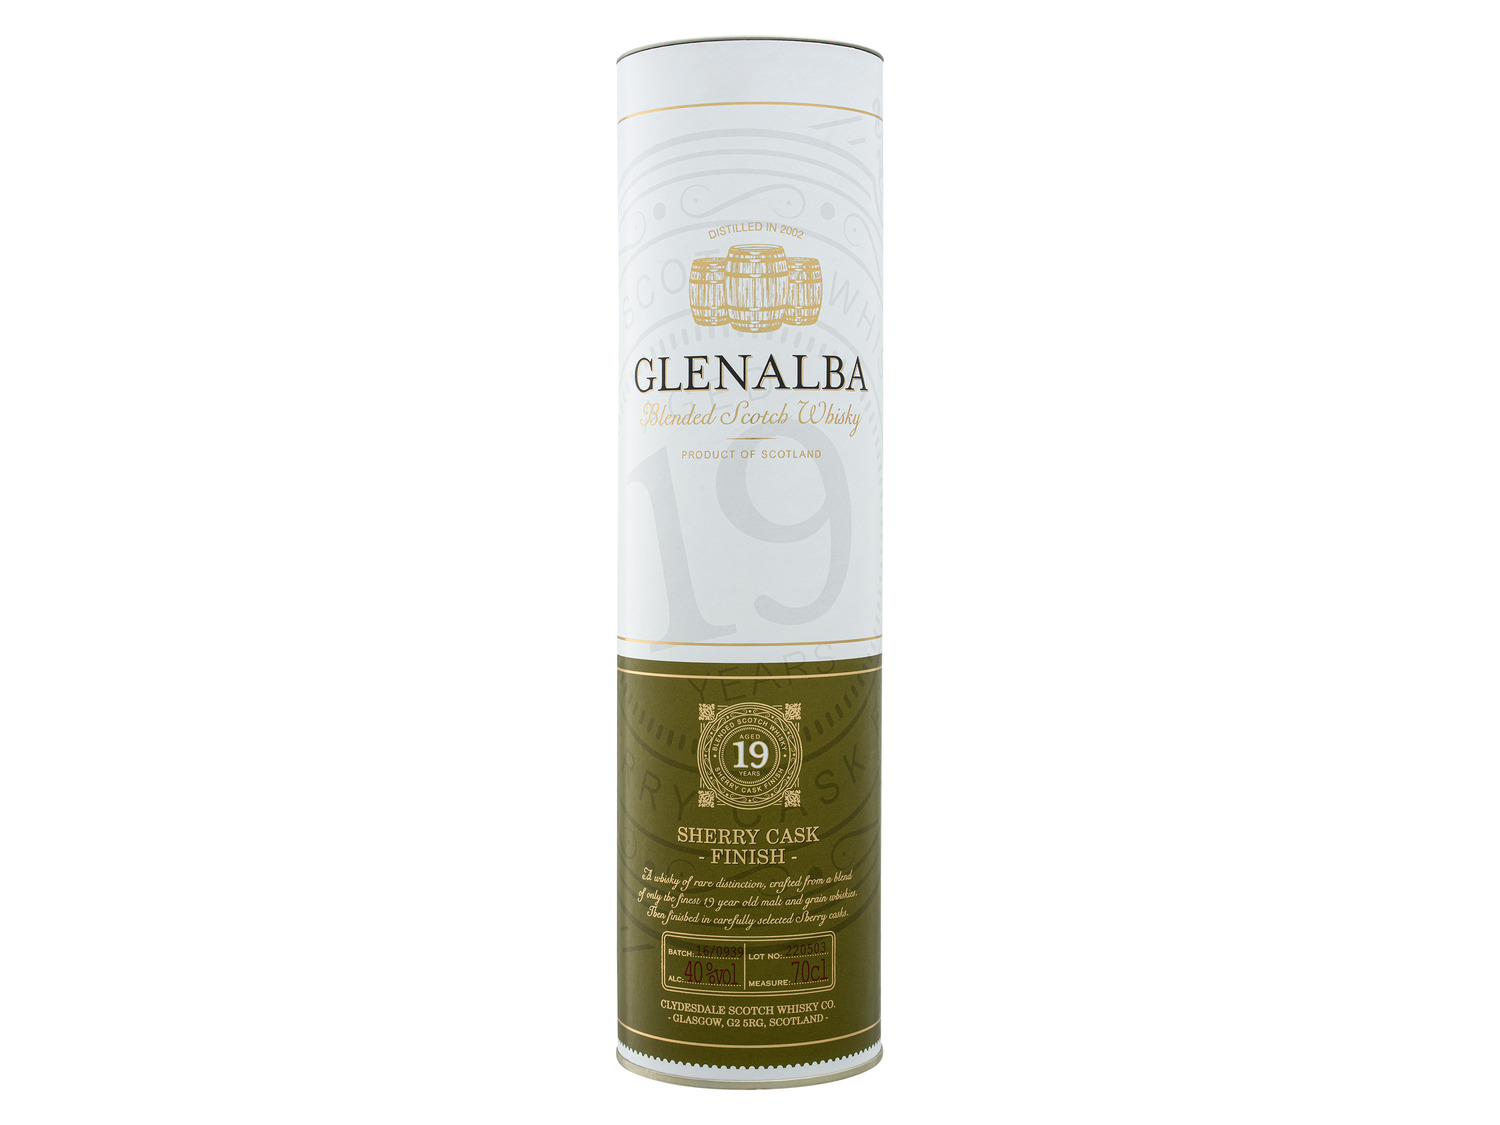 Glenalba Blended Scotch Oloroso Sherry… 19 Whisky Jahre